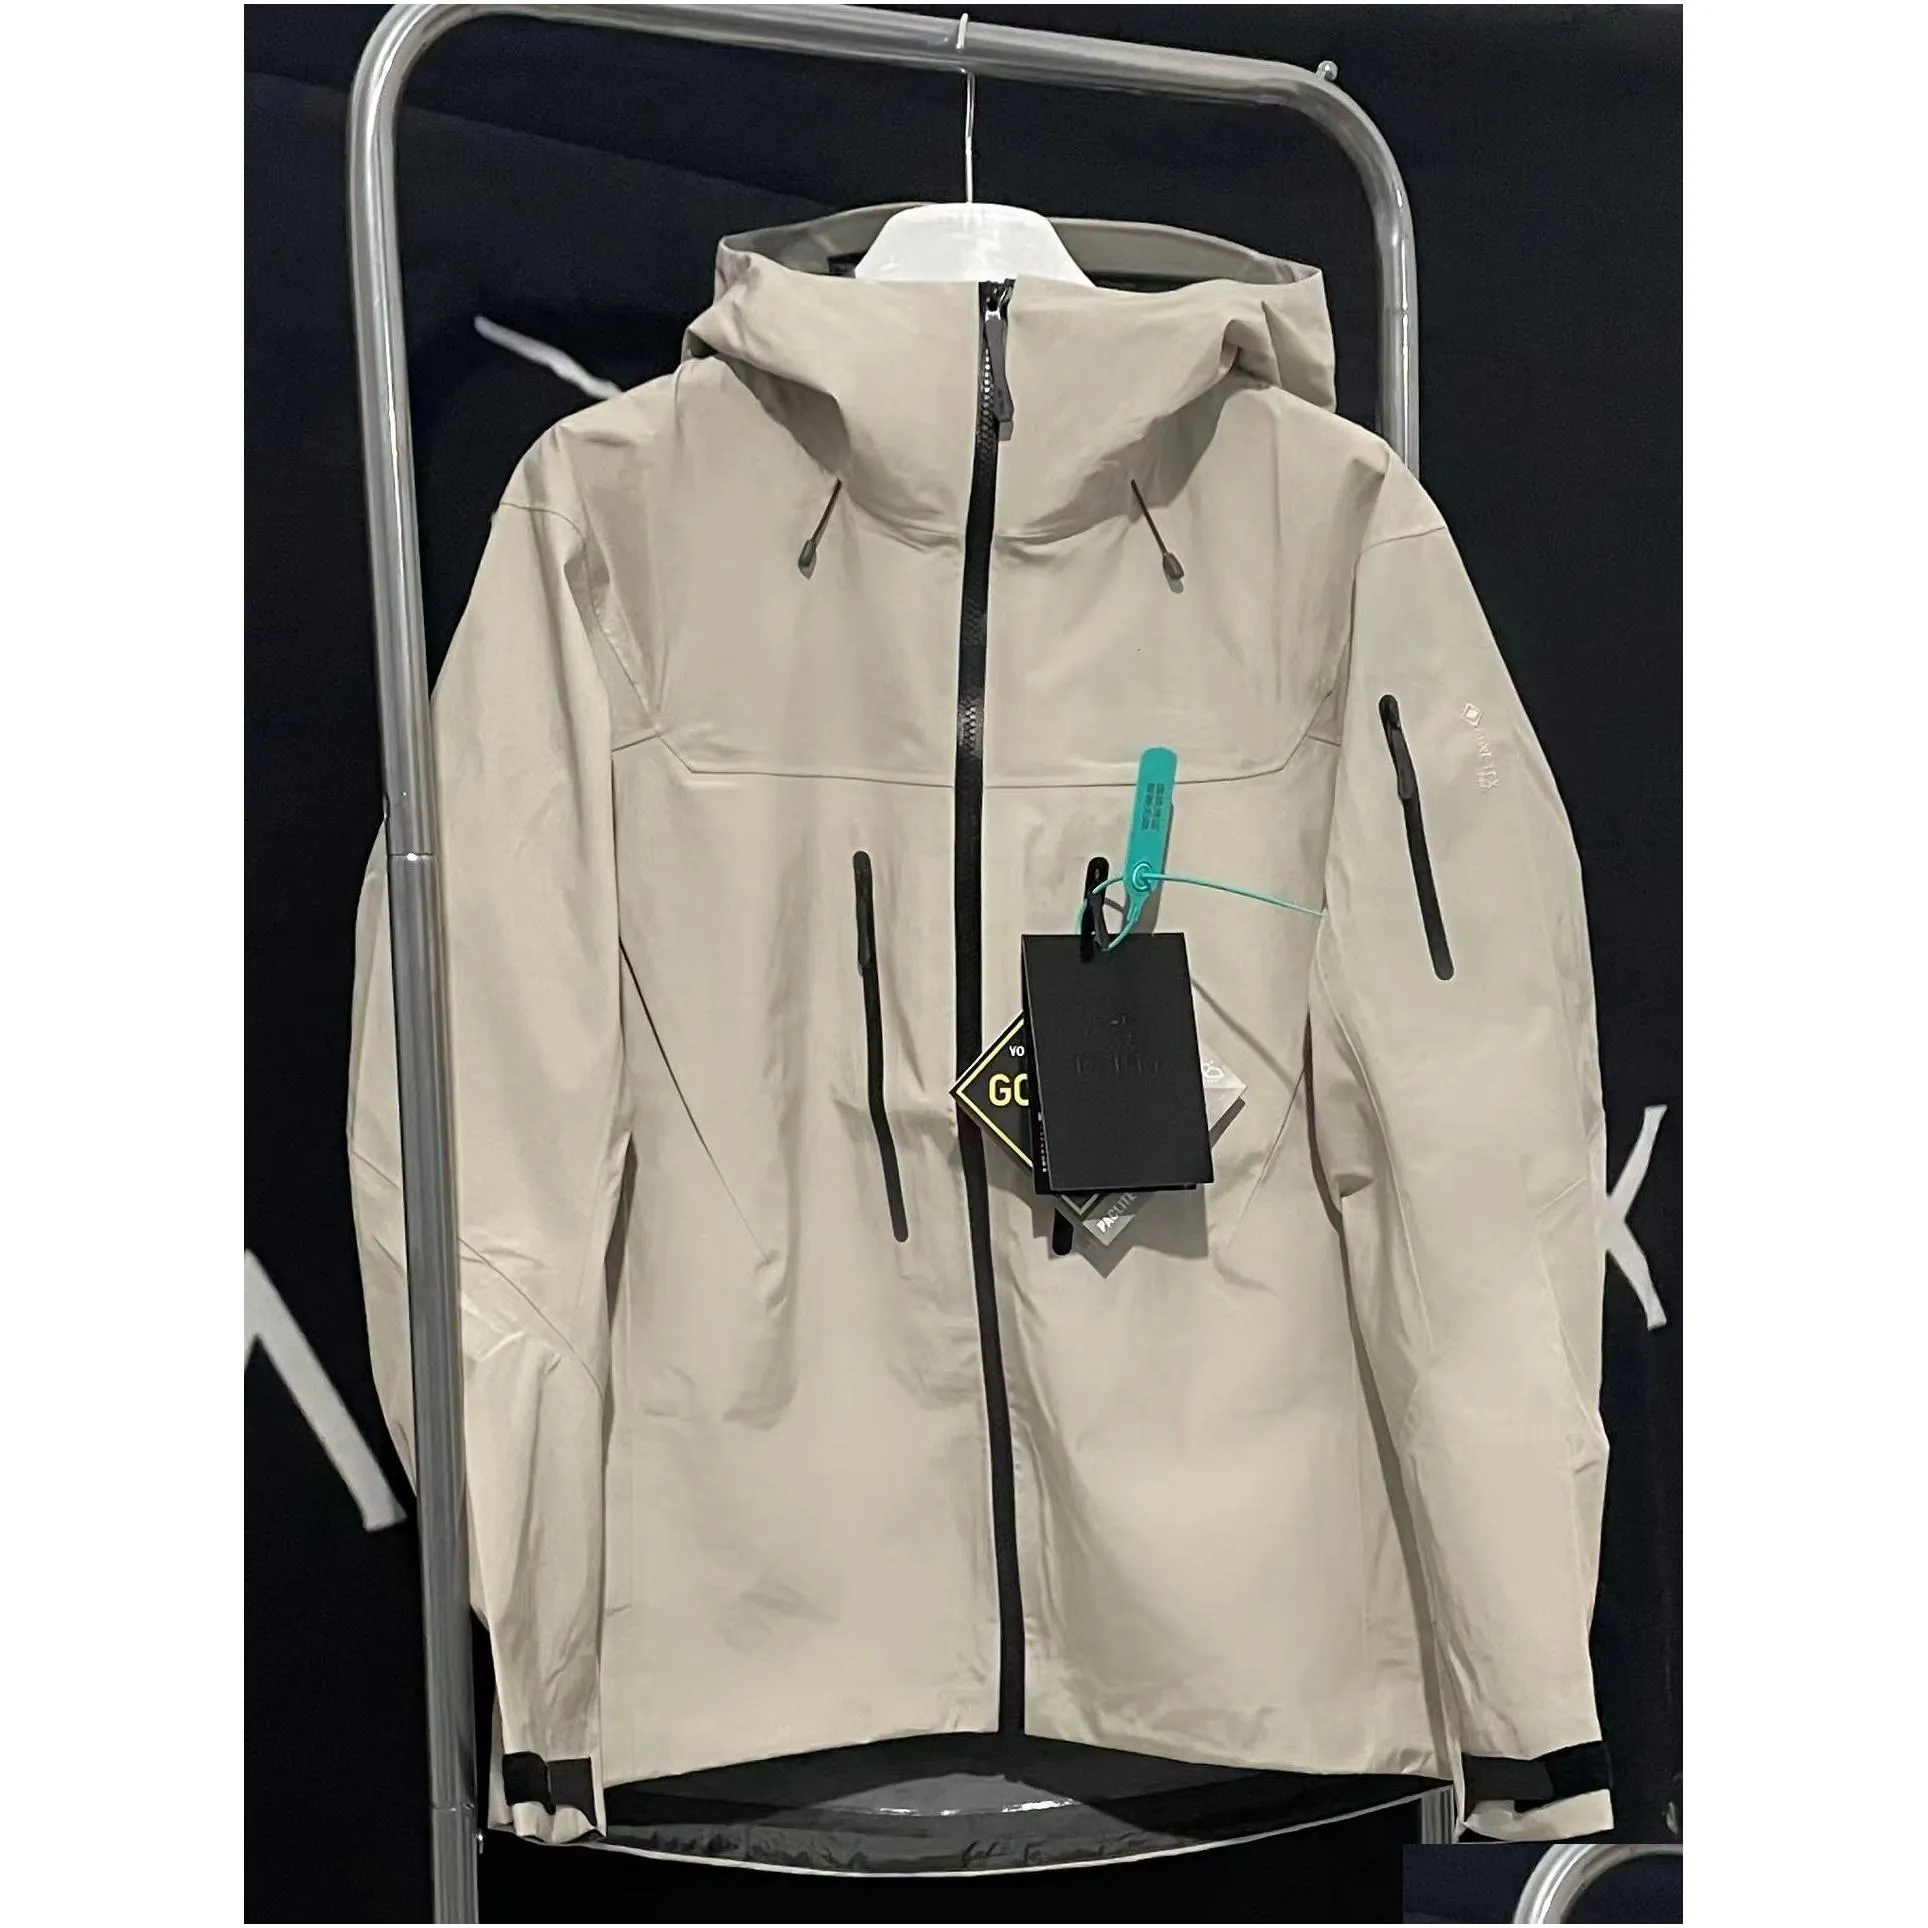 ARC Designer Men Jacket Triple GORE-TEXPRO SV/LT Waterproof Breathable Fabric Outdoor Waterproof Warm Jacket Men`s Women`s Casual Lightweight